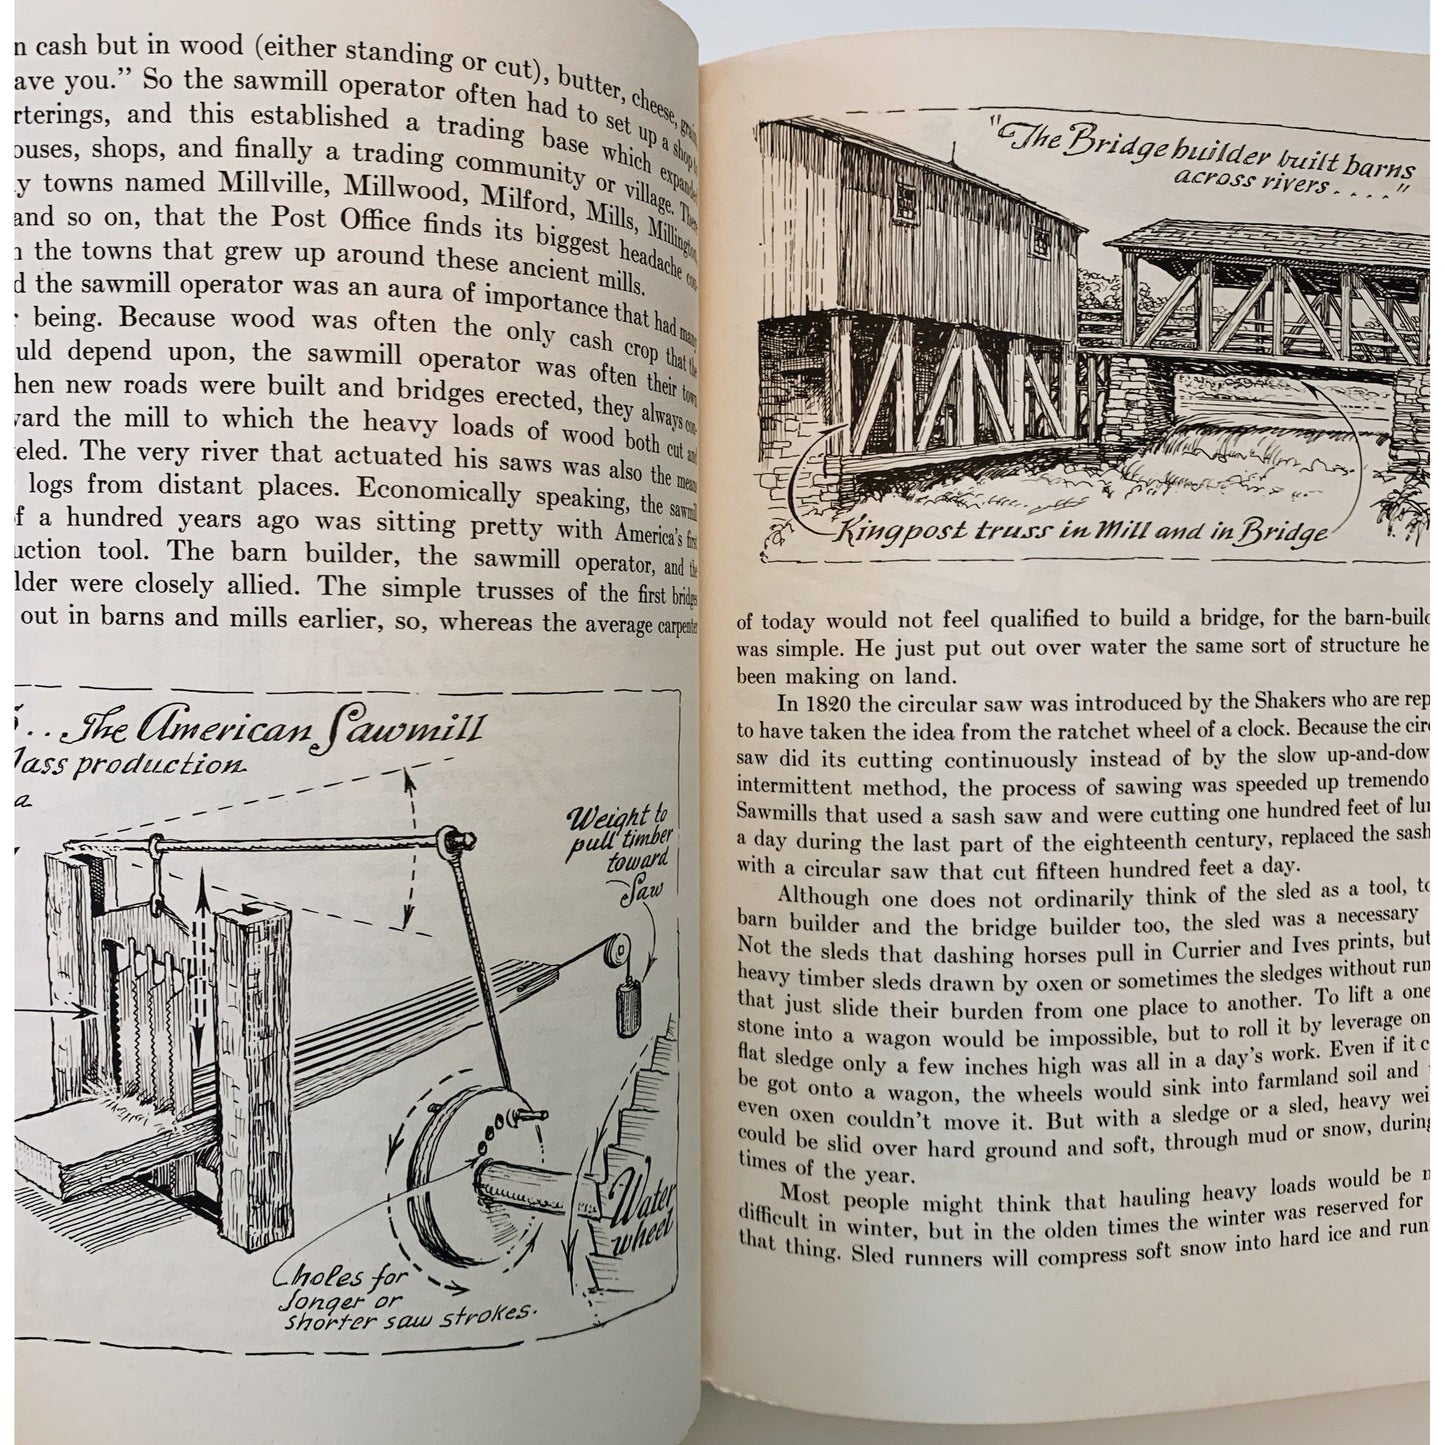 American Barns and Covered Bridges, Eric Sloane, 1954, Hardcover